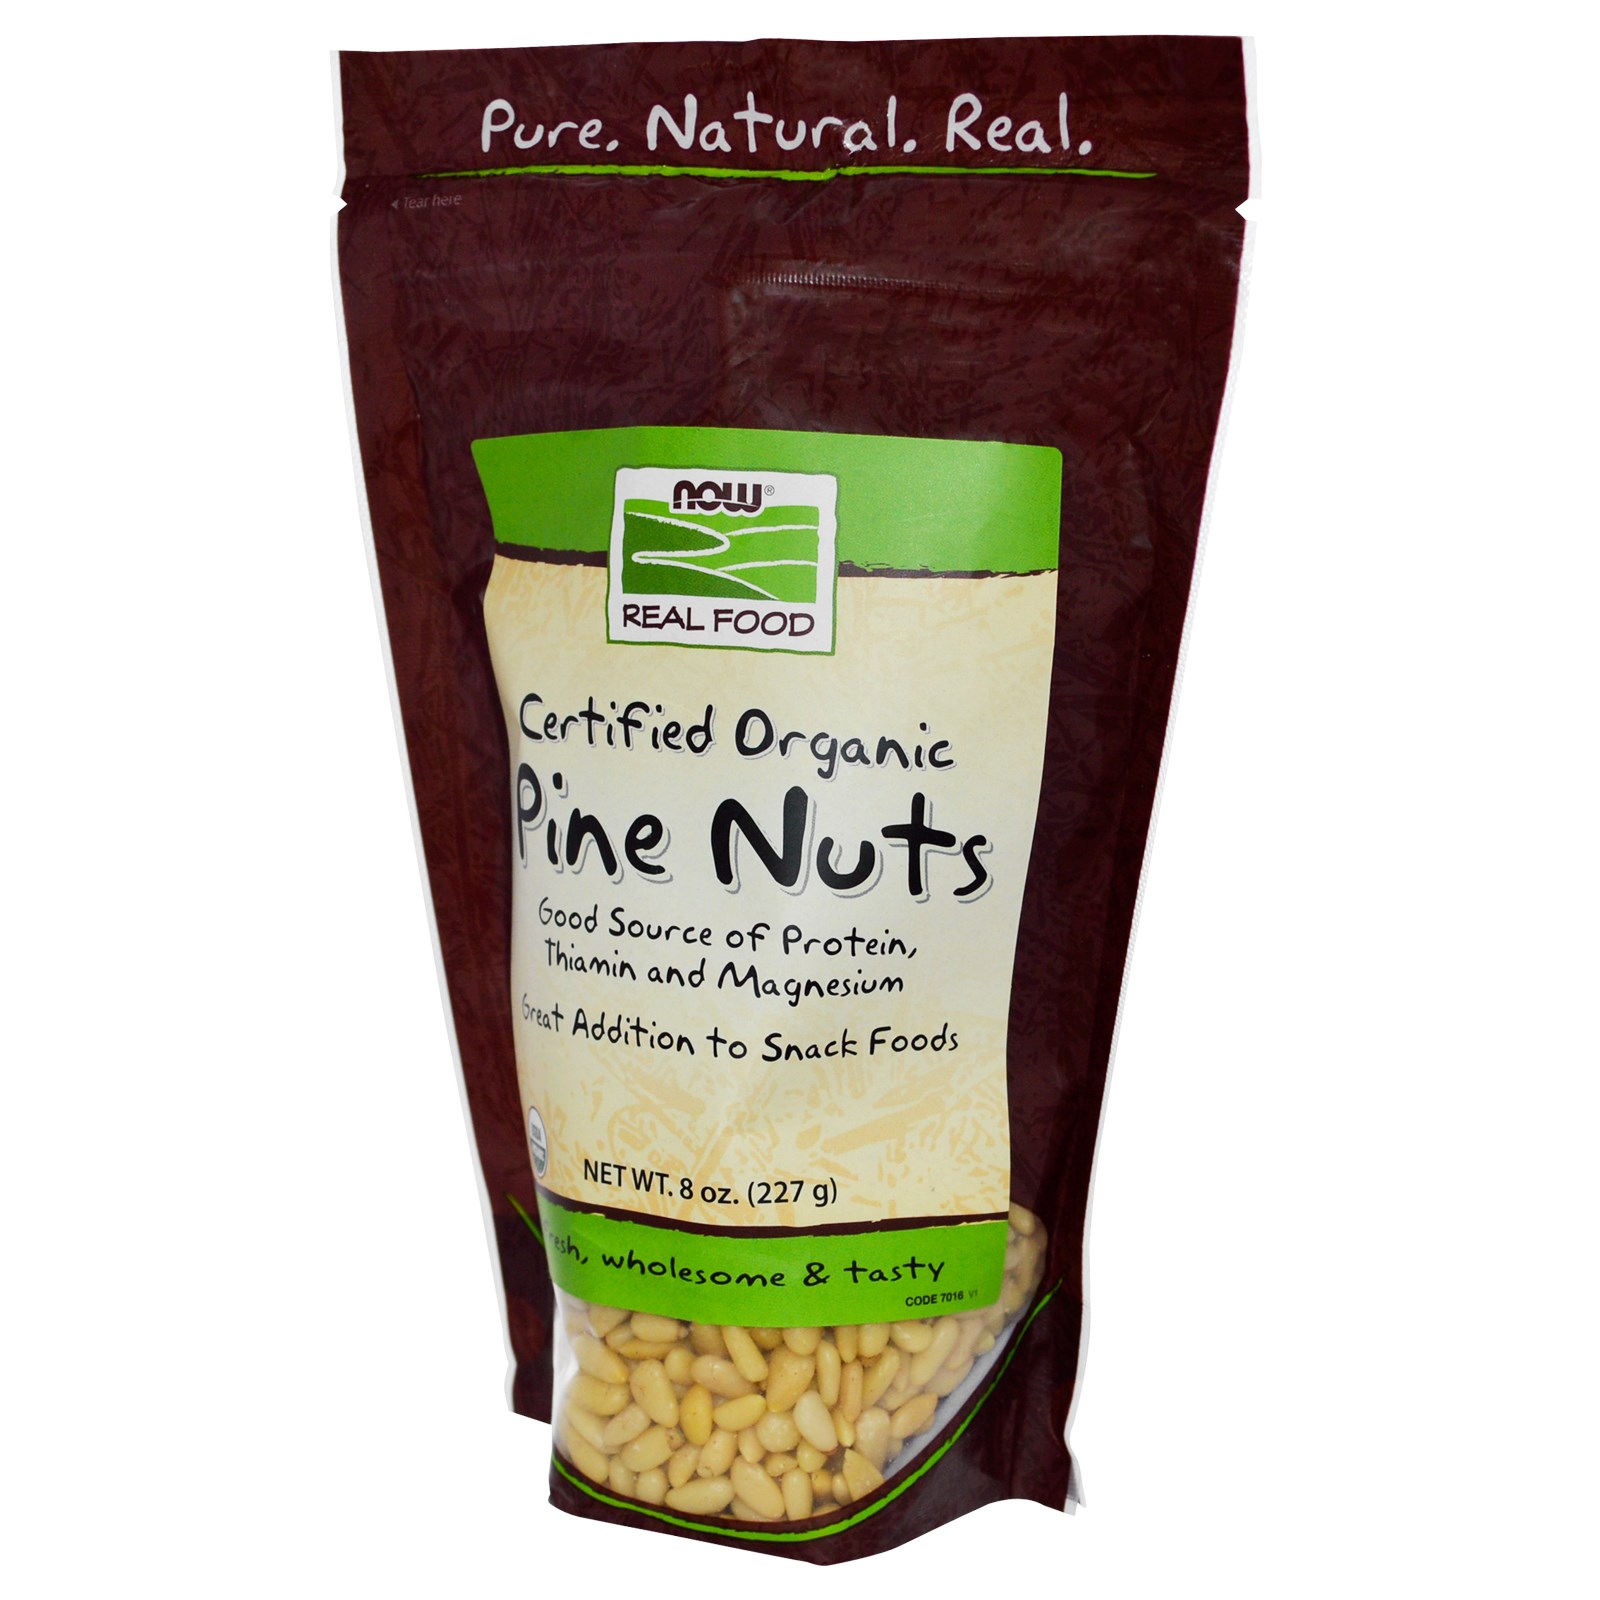 Pine Nuts, Certified Organic - 8oz